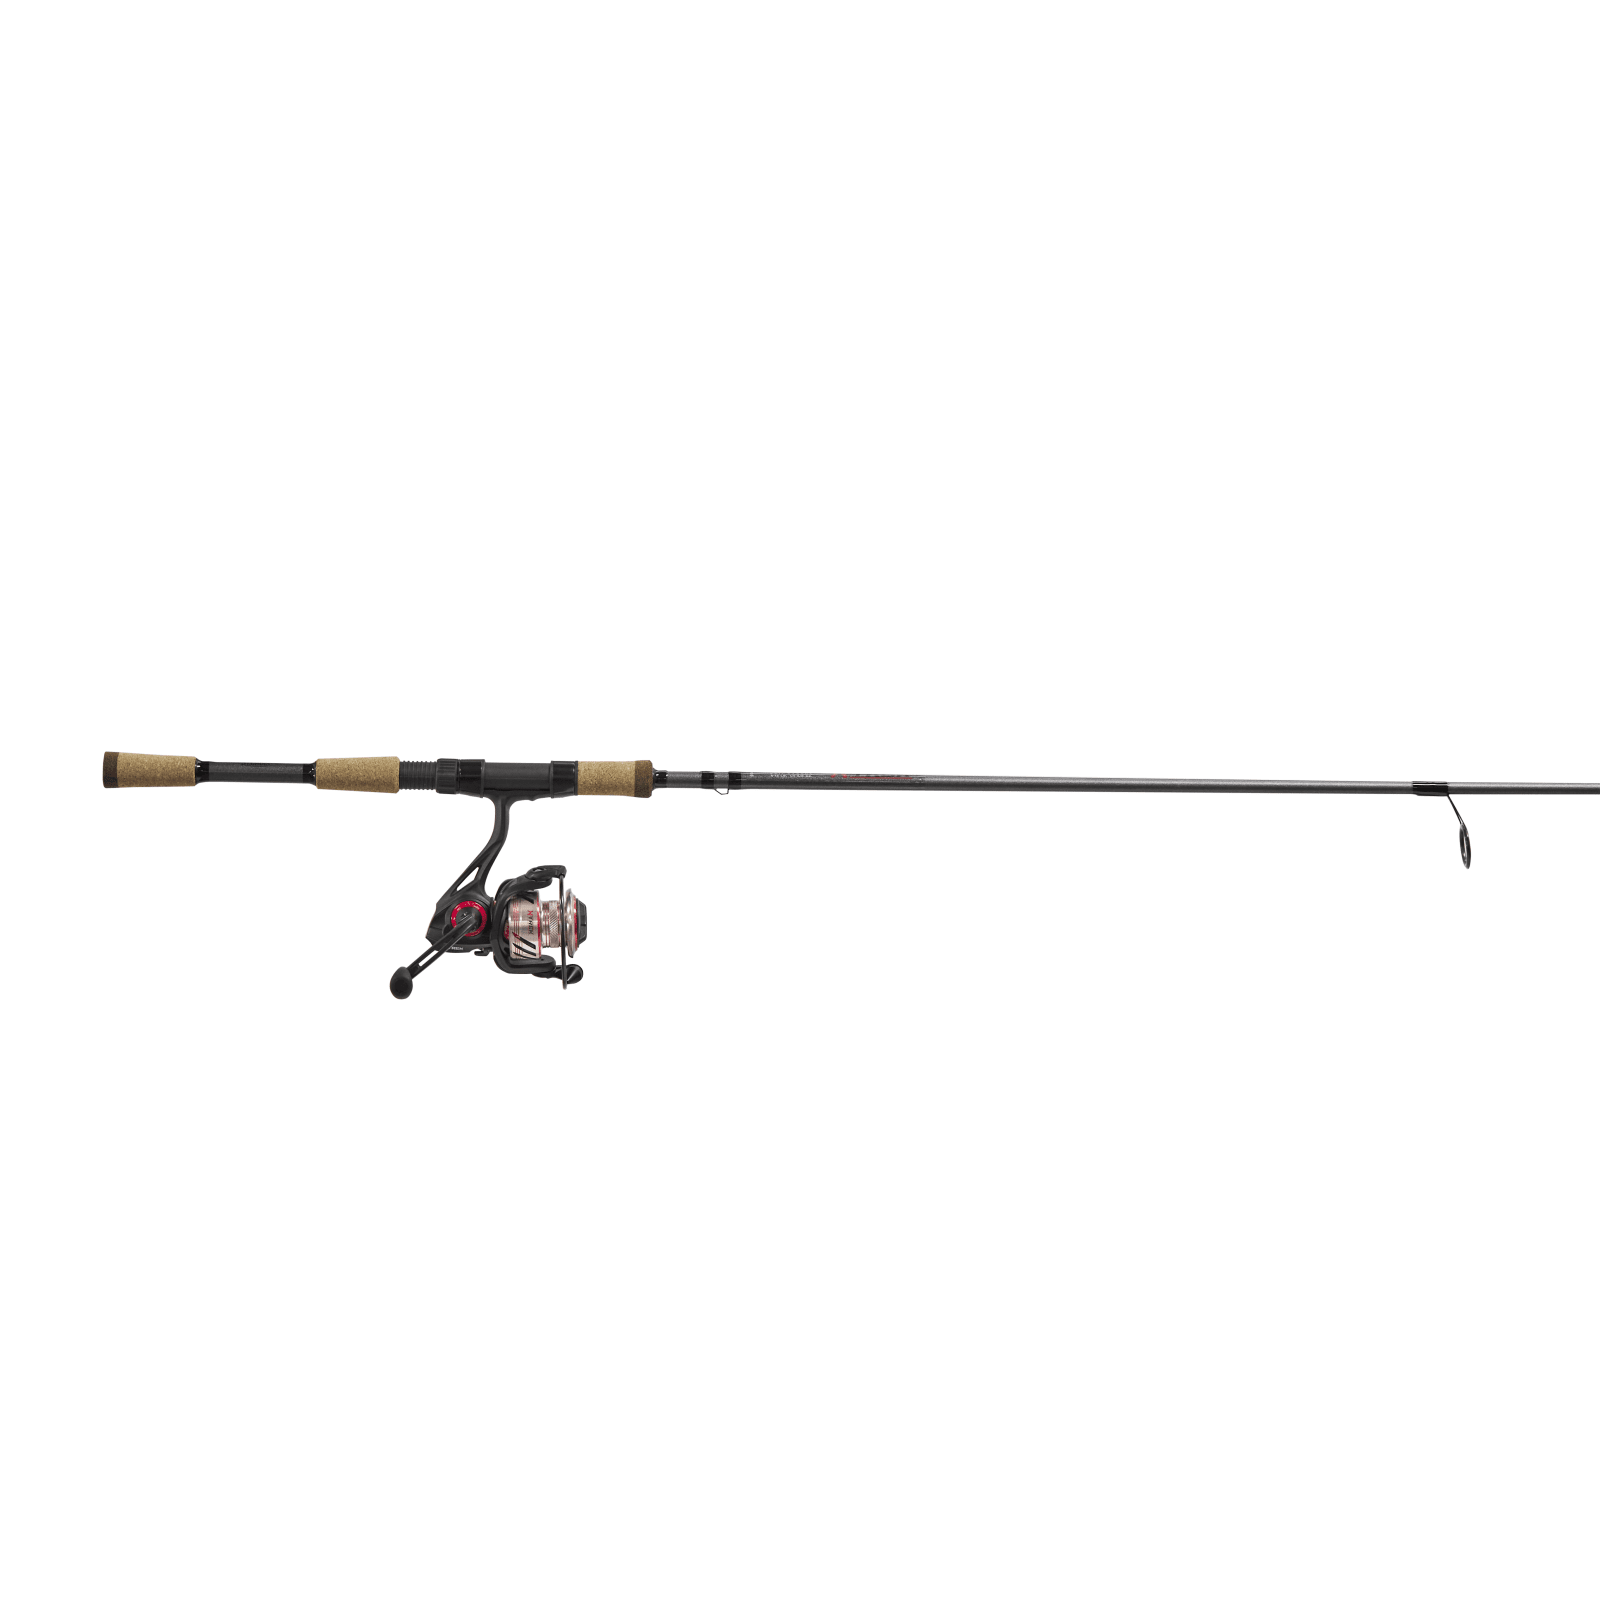 4 x Fishing Rod Plastic Tubes Carp Rod Size 6ft 6 inch - Shopping.com